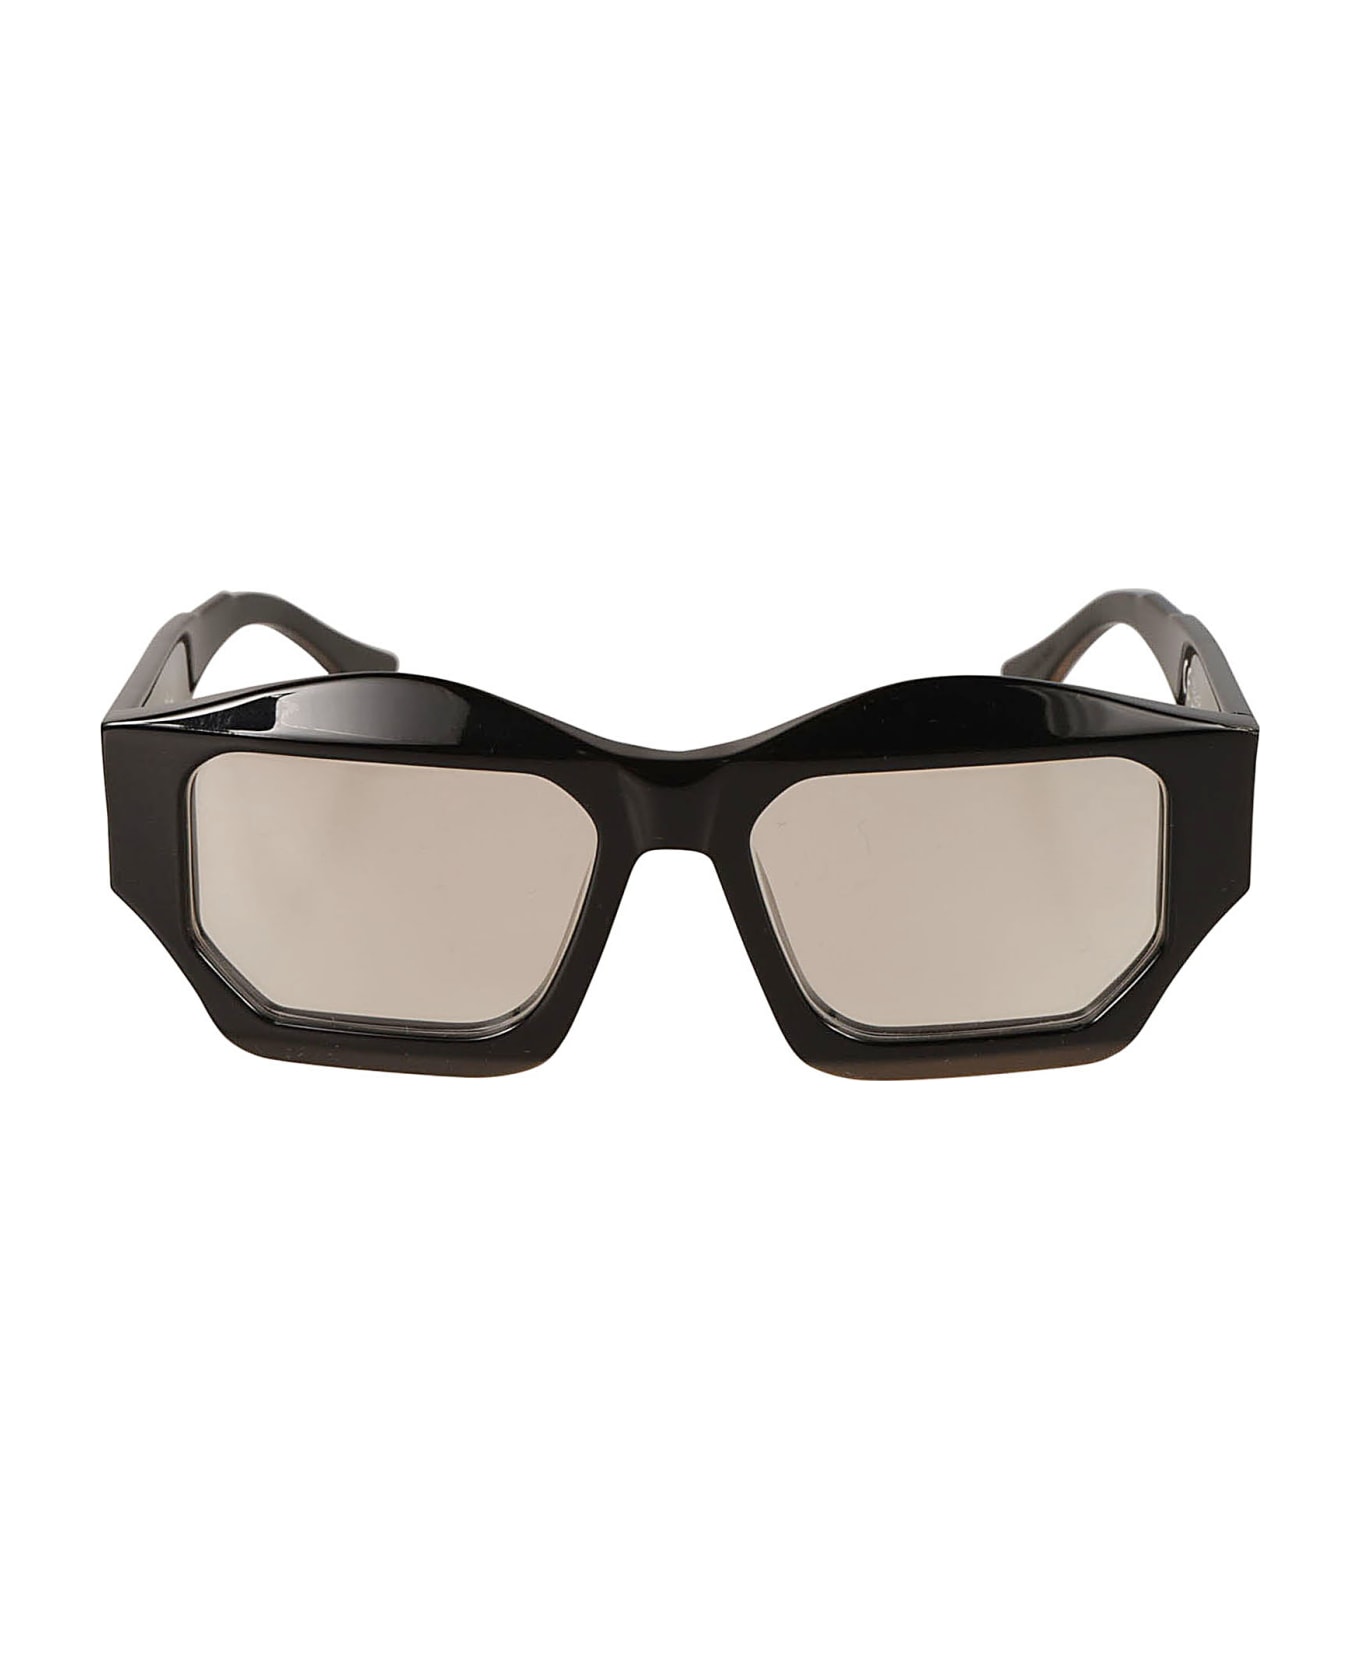 Kuboraum F4 Glasses Glasses - black